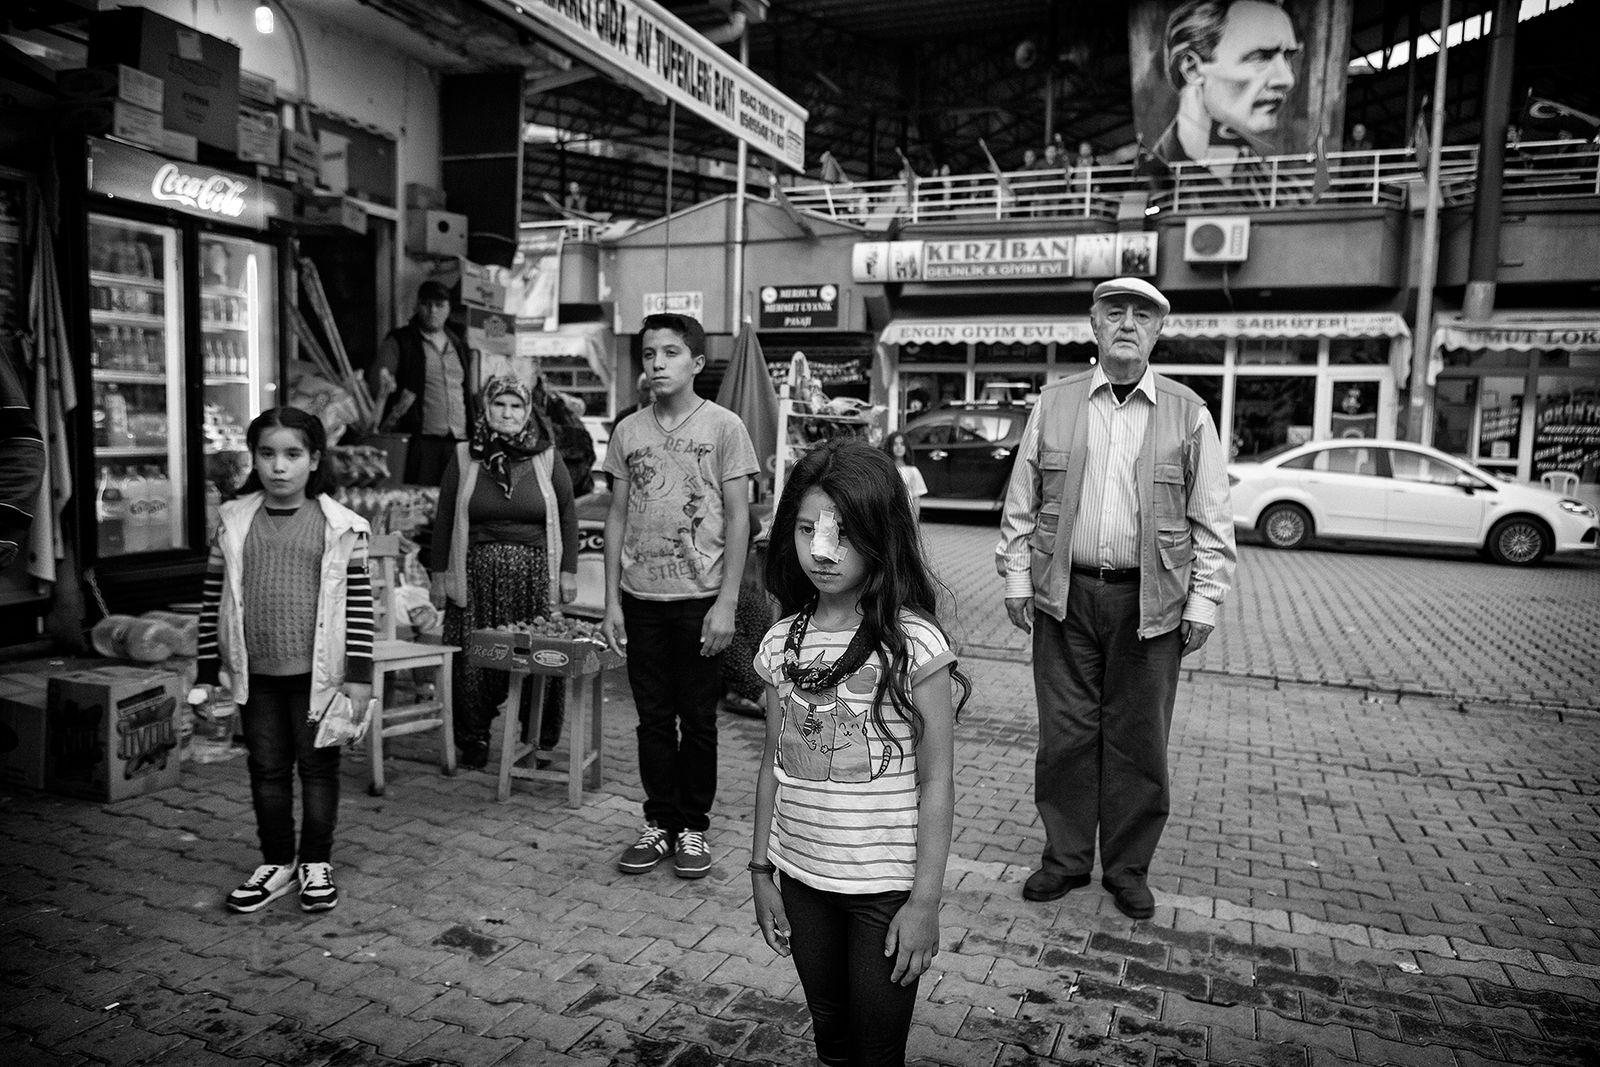 © Jalal Shams Azaran - People stand during the national anthem in Saimbeyli, Adana, Turkey.